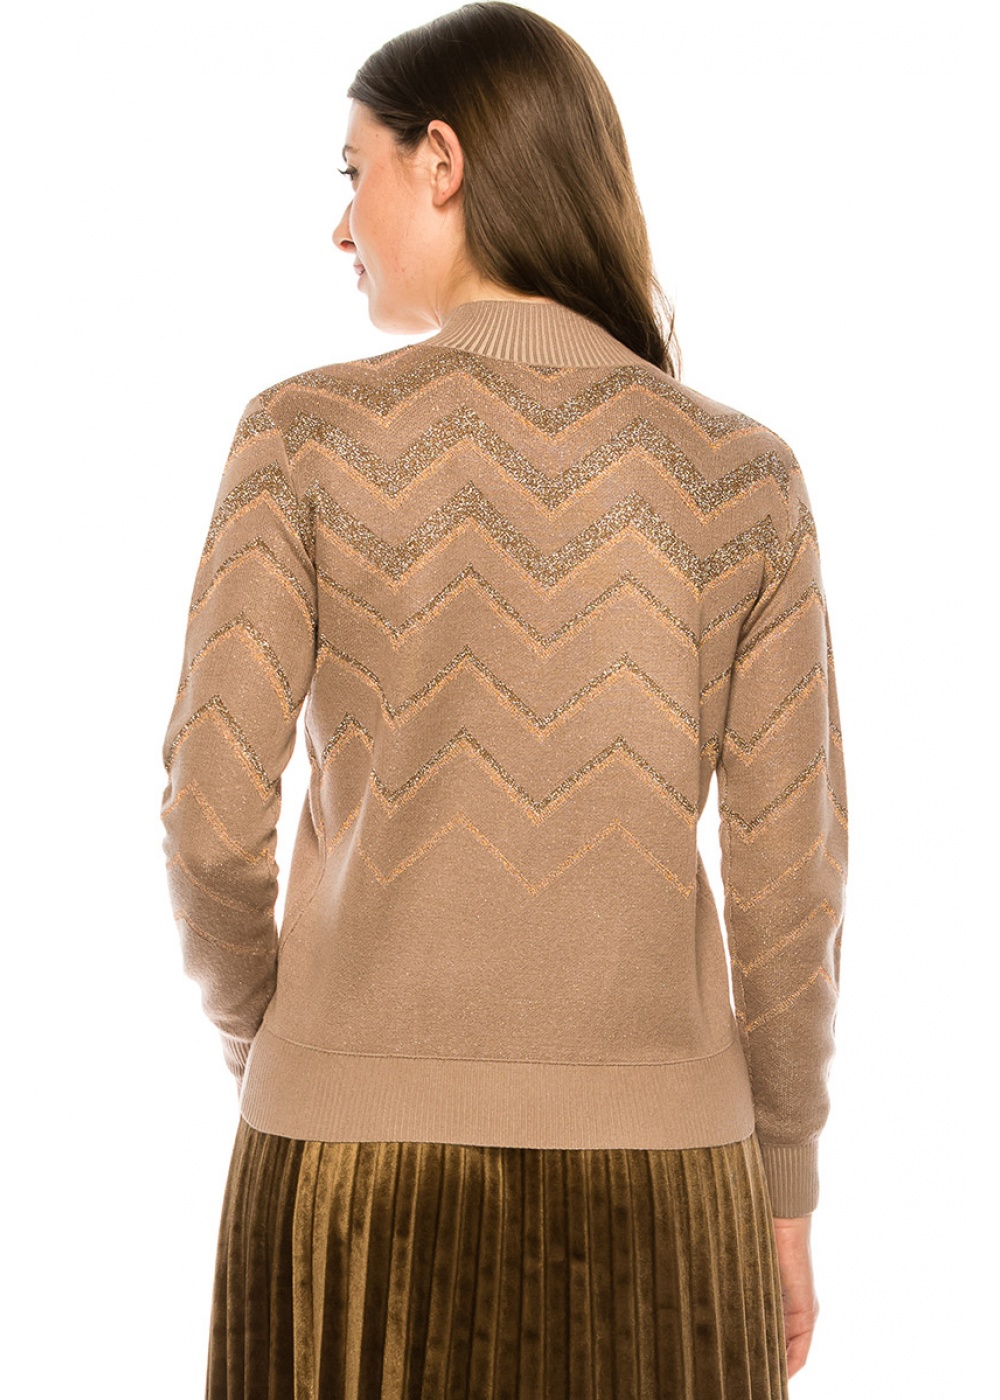 Taupe Glittered Chevron Sweater